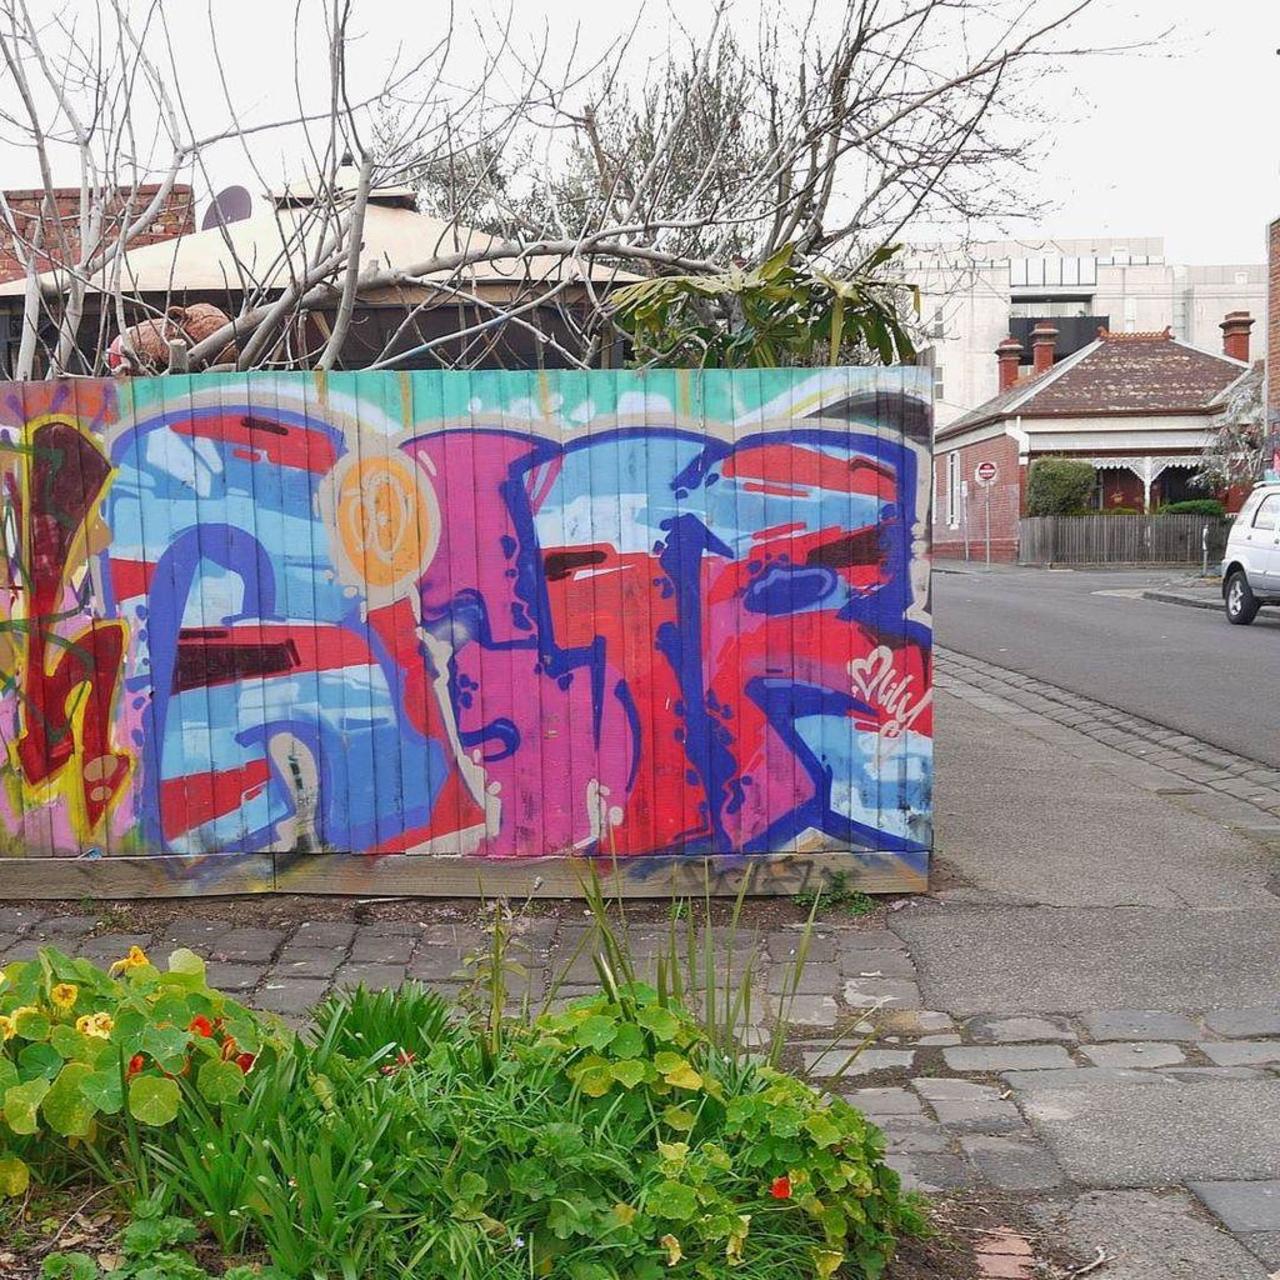 #streetart #urbanart #graffiti #graff #streetartmelbourne #streetartofficial #urbanex #urbanexploration #melbourne … http://t.co/o262HyLS0p